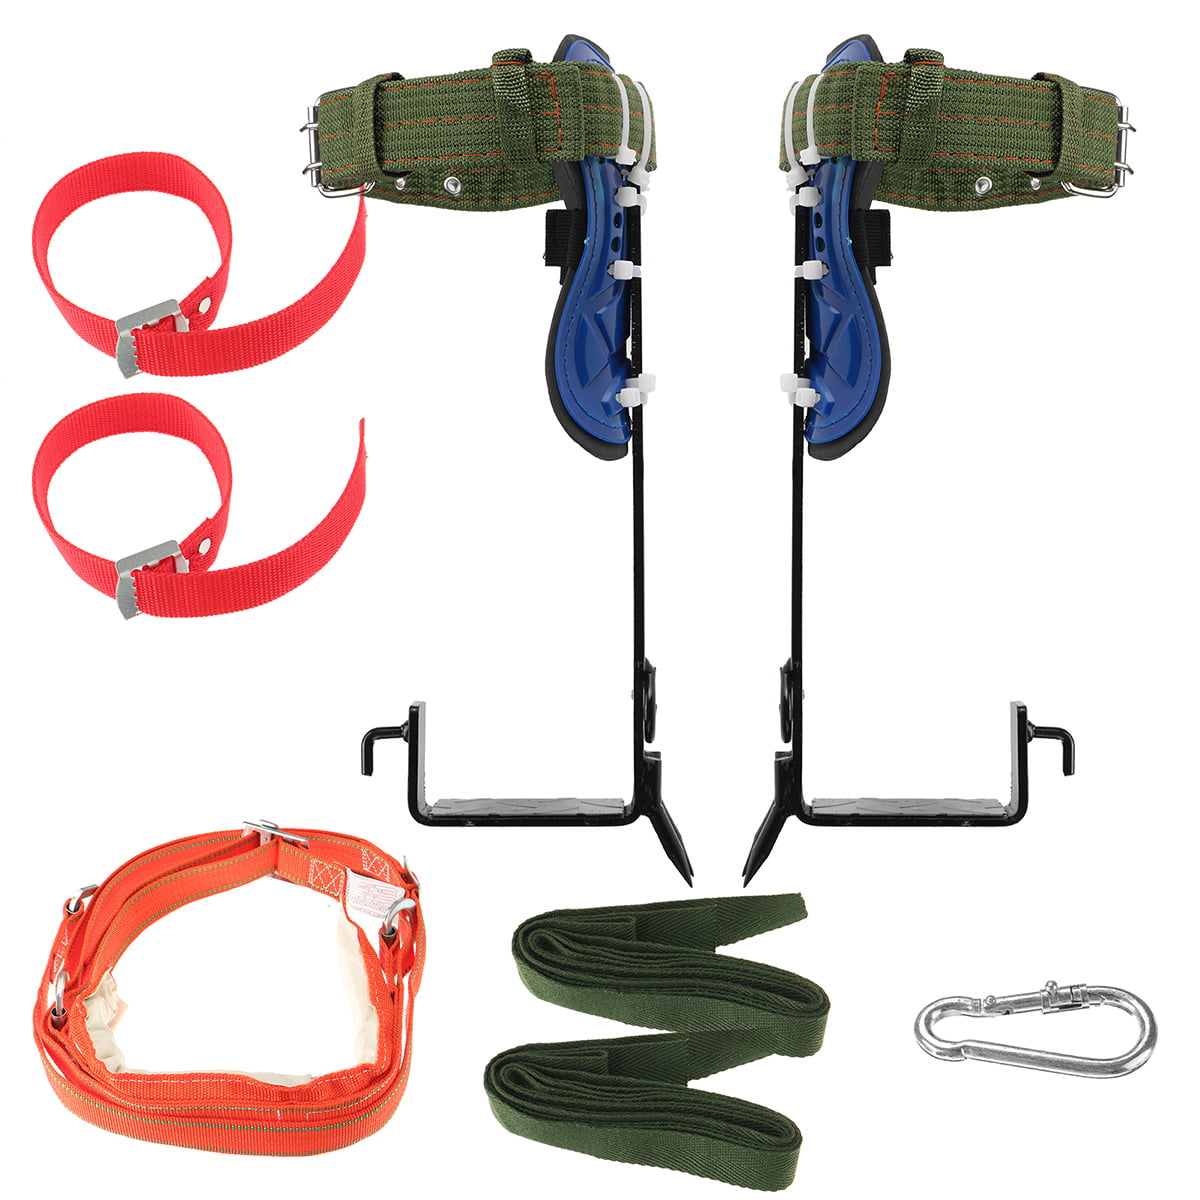 2 Gears Tree/Pole Climbing Spike Set Both Sides Safety Belt Lanyard Rope Tool US 